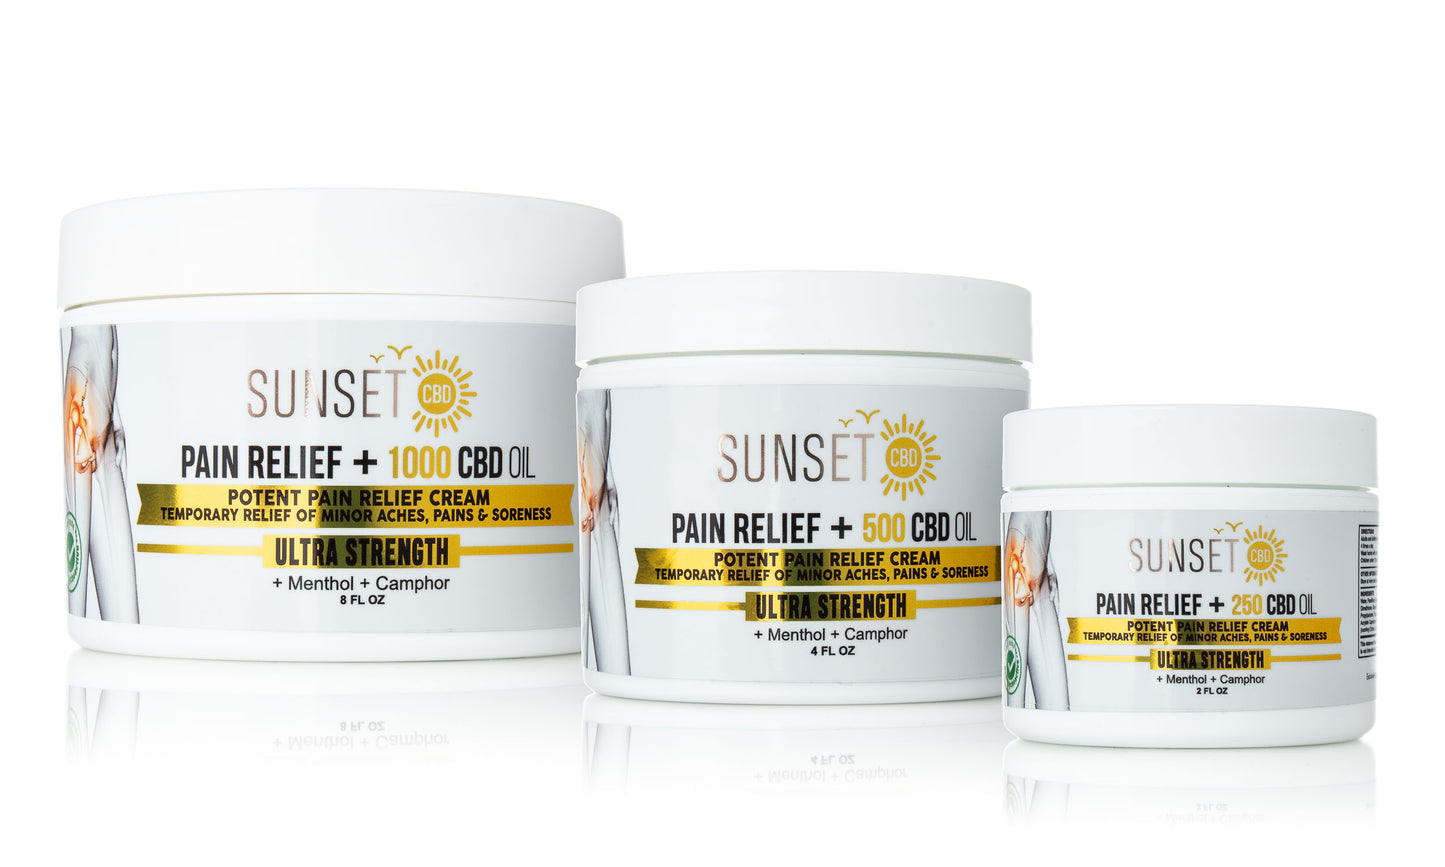 Sunset CBD Pain Relief Creams